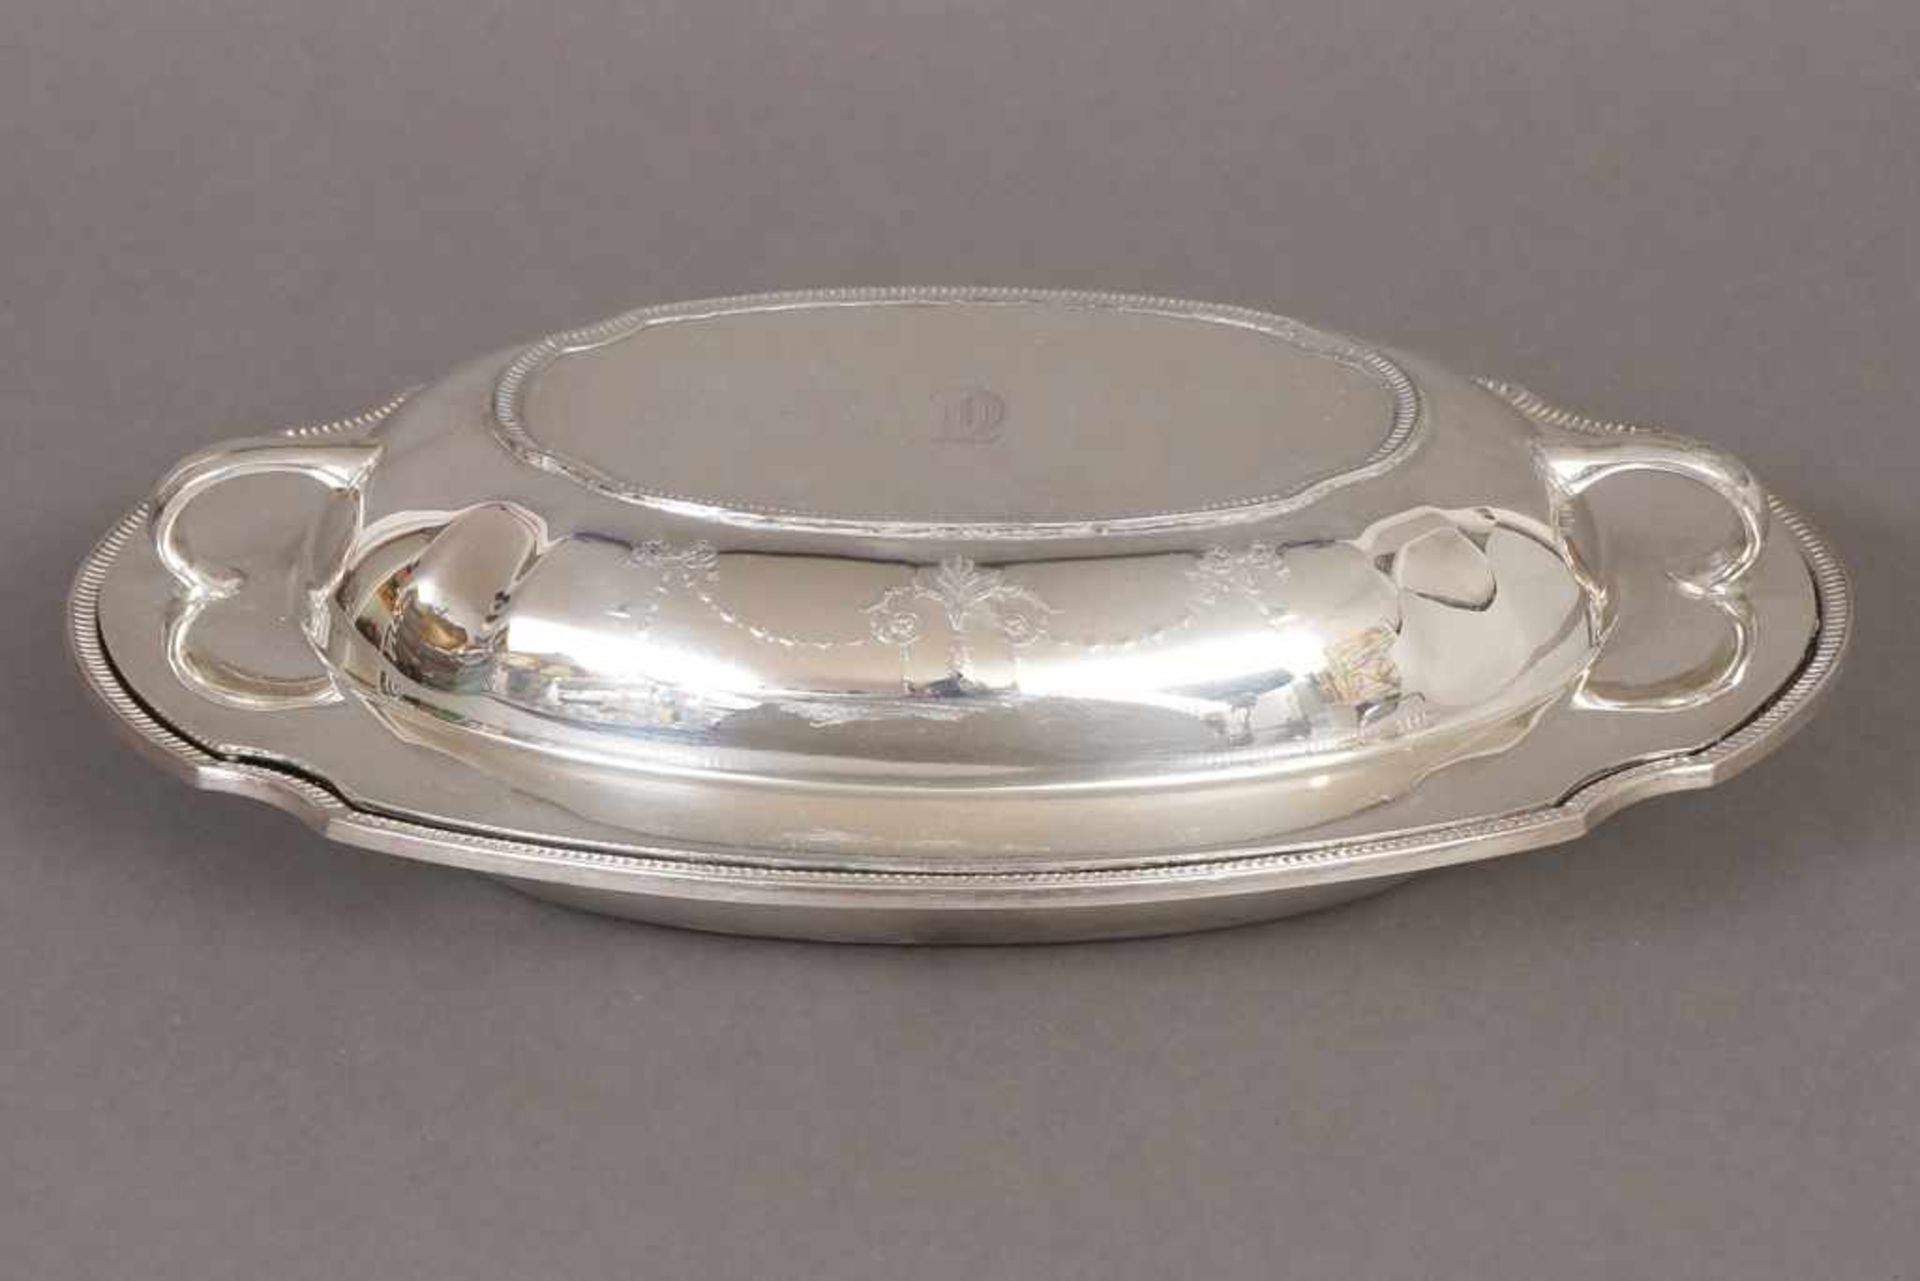 Servier-Deckelschale Metall, versilbert, USA, um 1920, oval-passige Form, Deckel mit